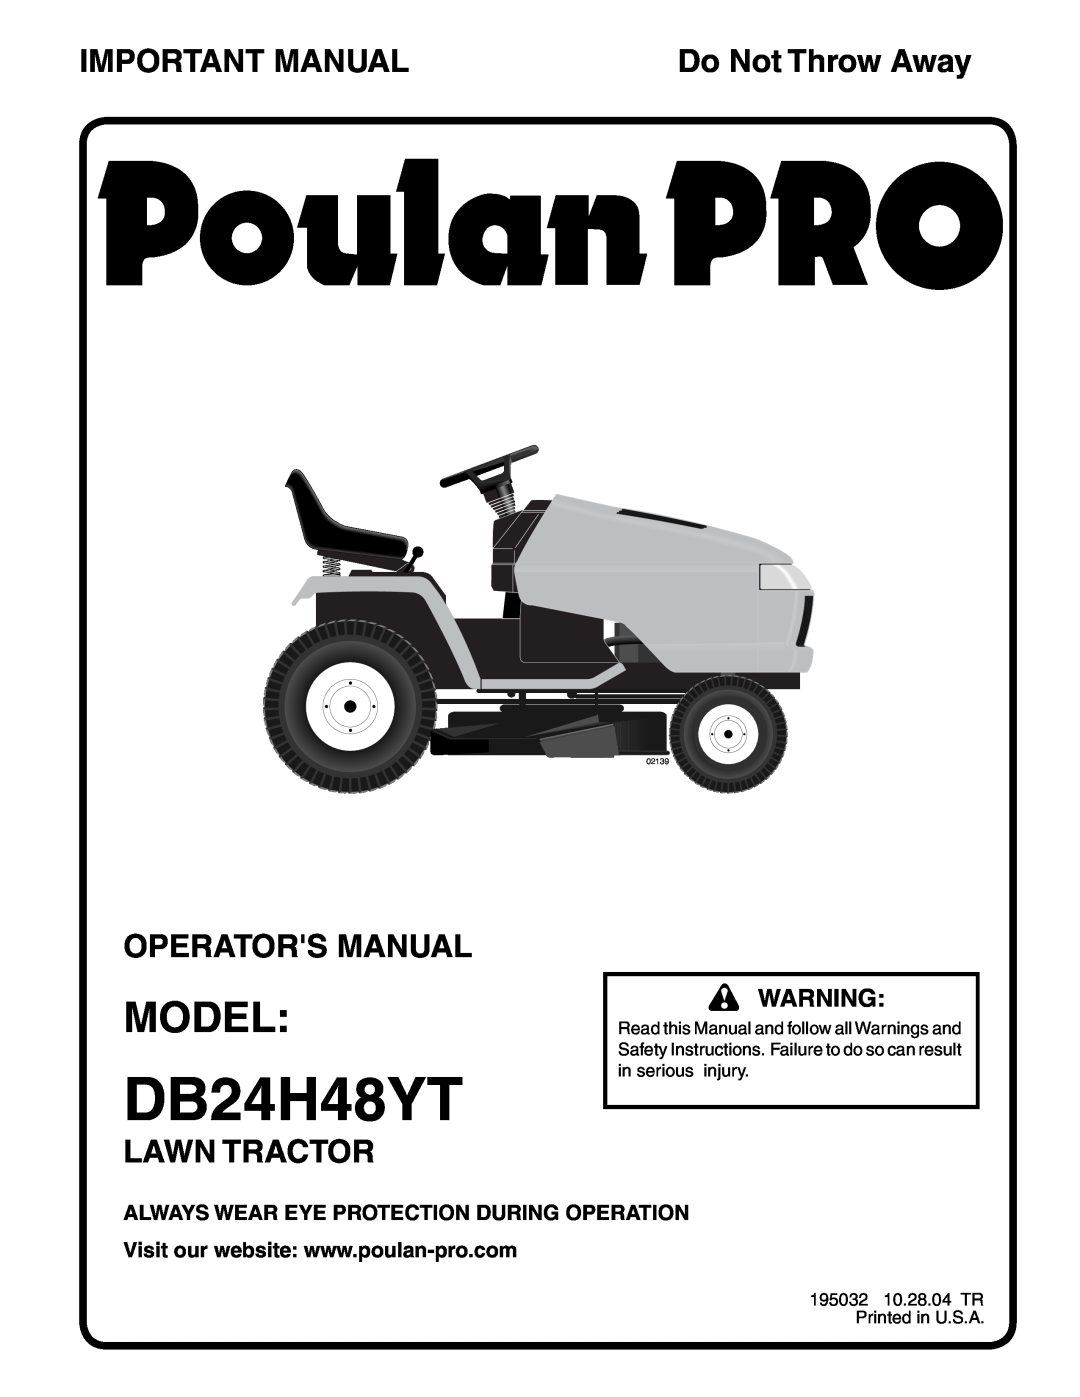 Poulan DB24H48YT manual Model, Important Manual, Operators Manual, Lawn Tractor, Do Not Throw Away, 02139 